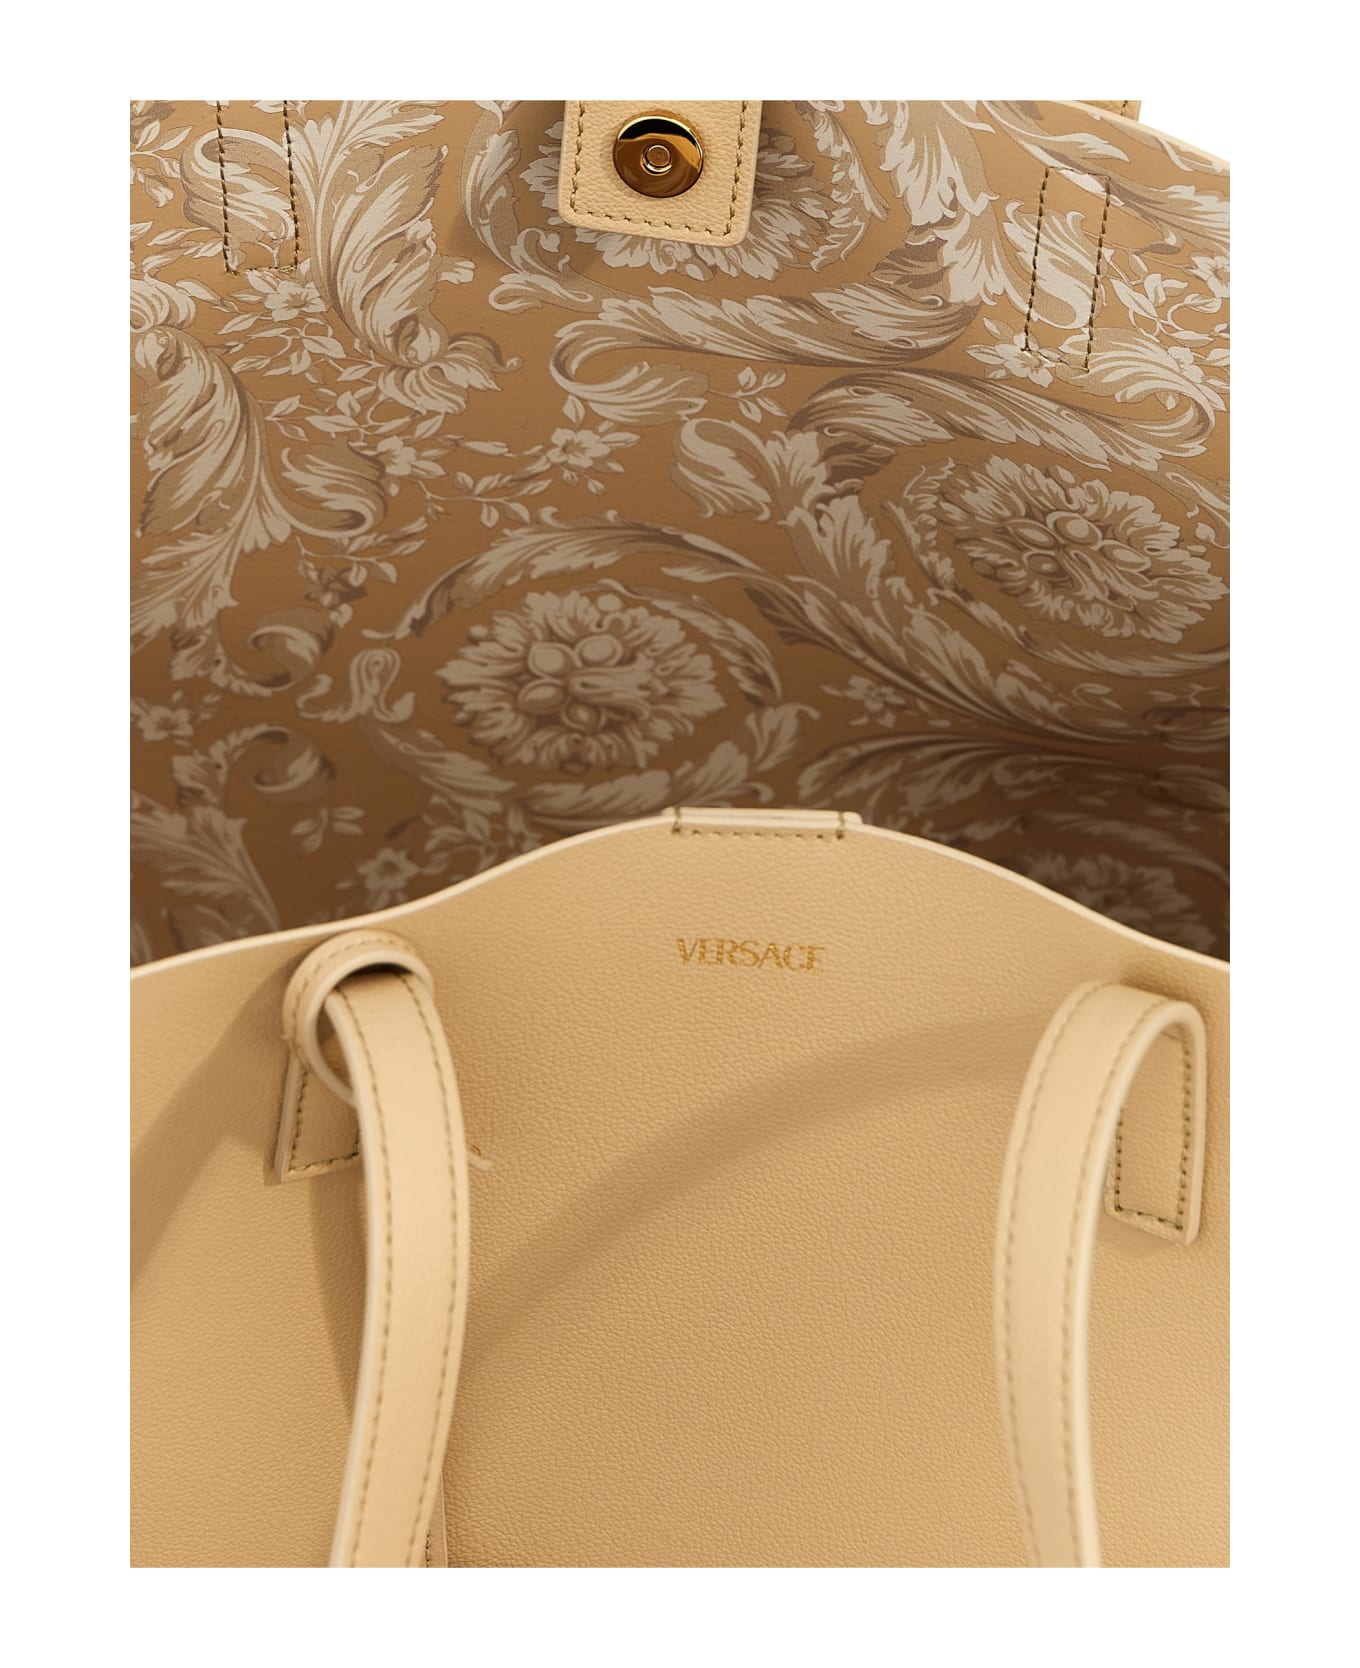 Versace 'virtus' Shopping Bag - Beige トートバッグ